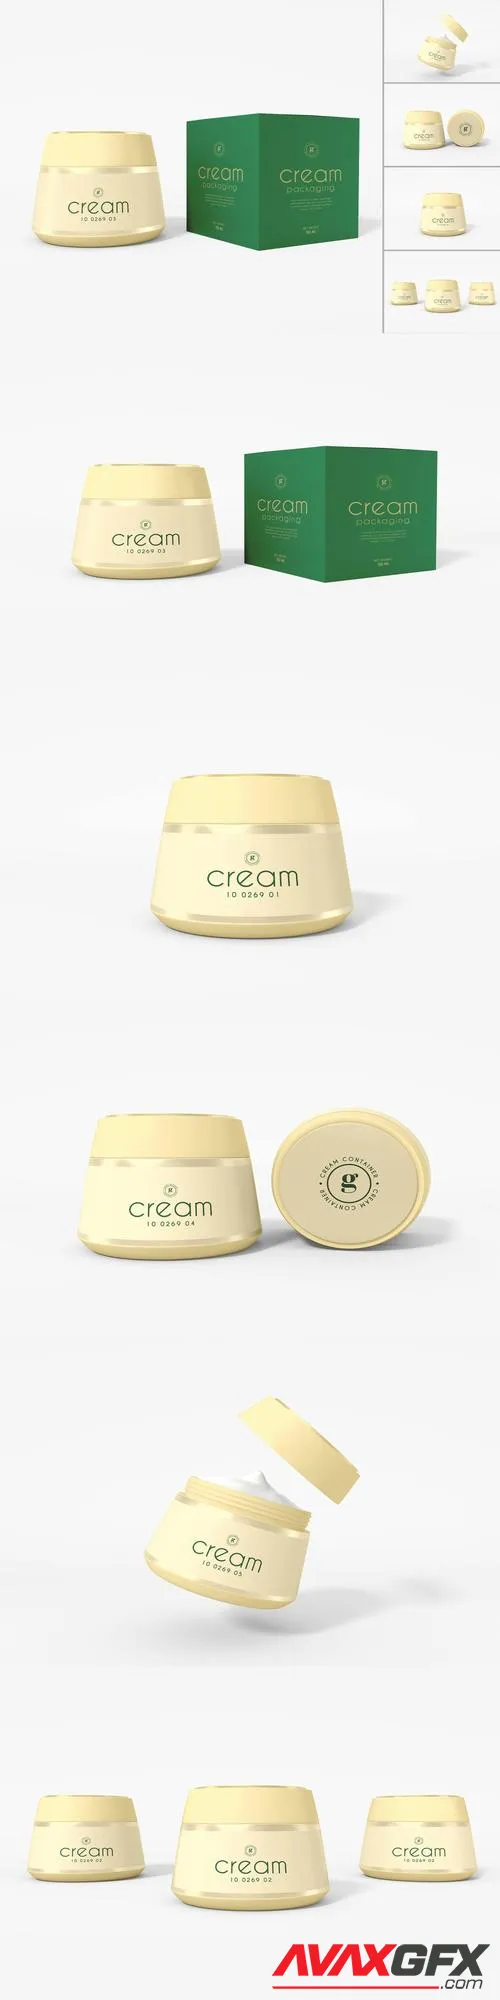 Glossy Cosmetic Cream Jar Branding Mockup Set